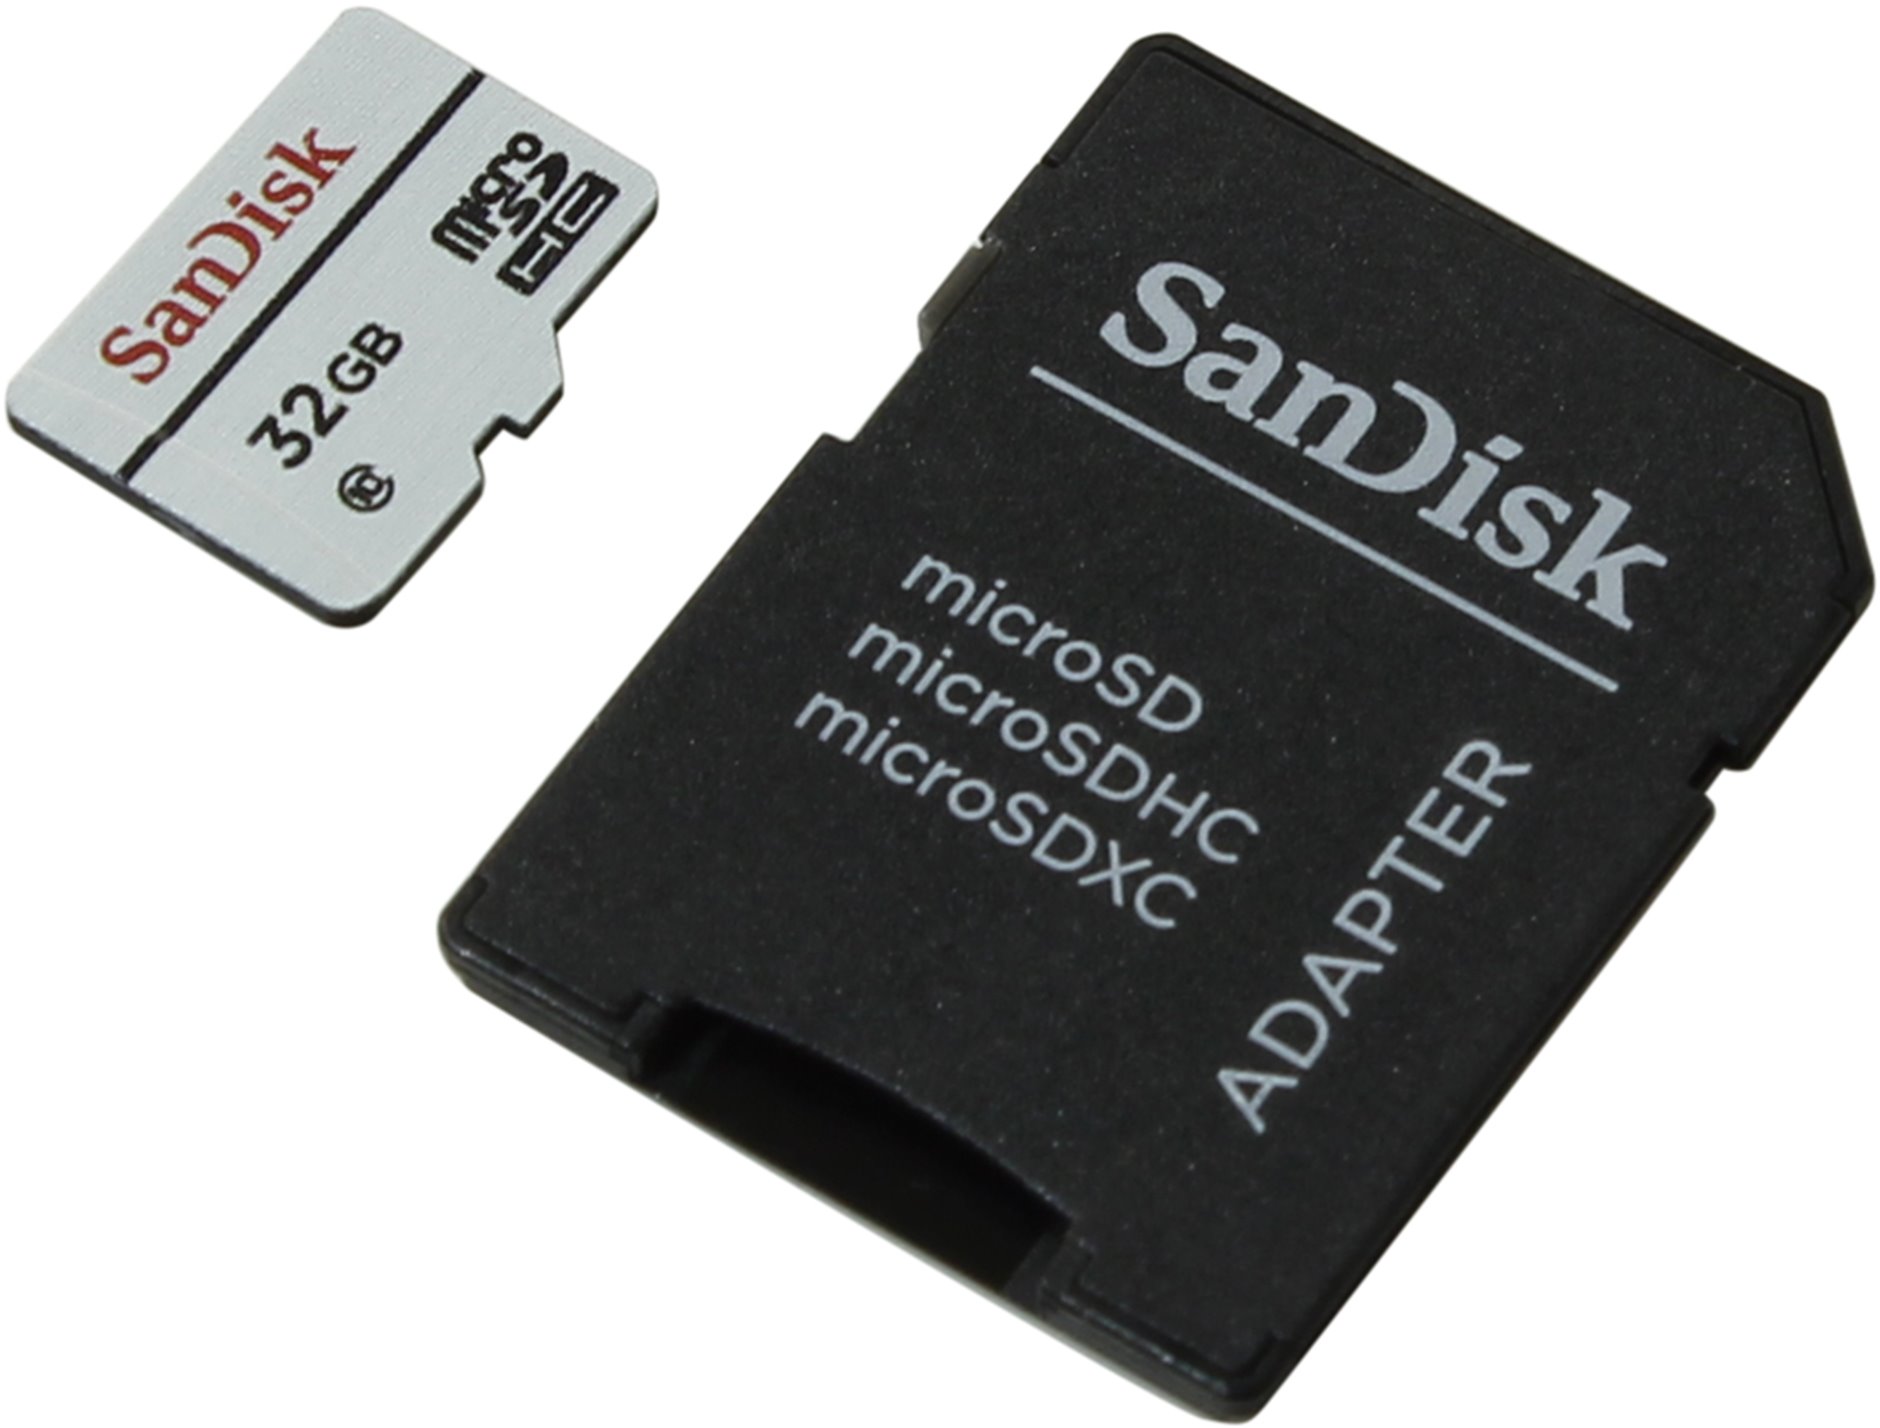 SanDisk High Endurance microSDHC Class 10